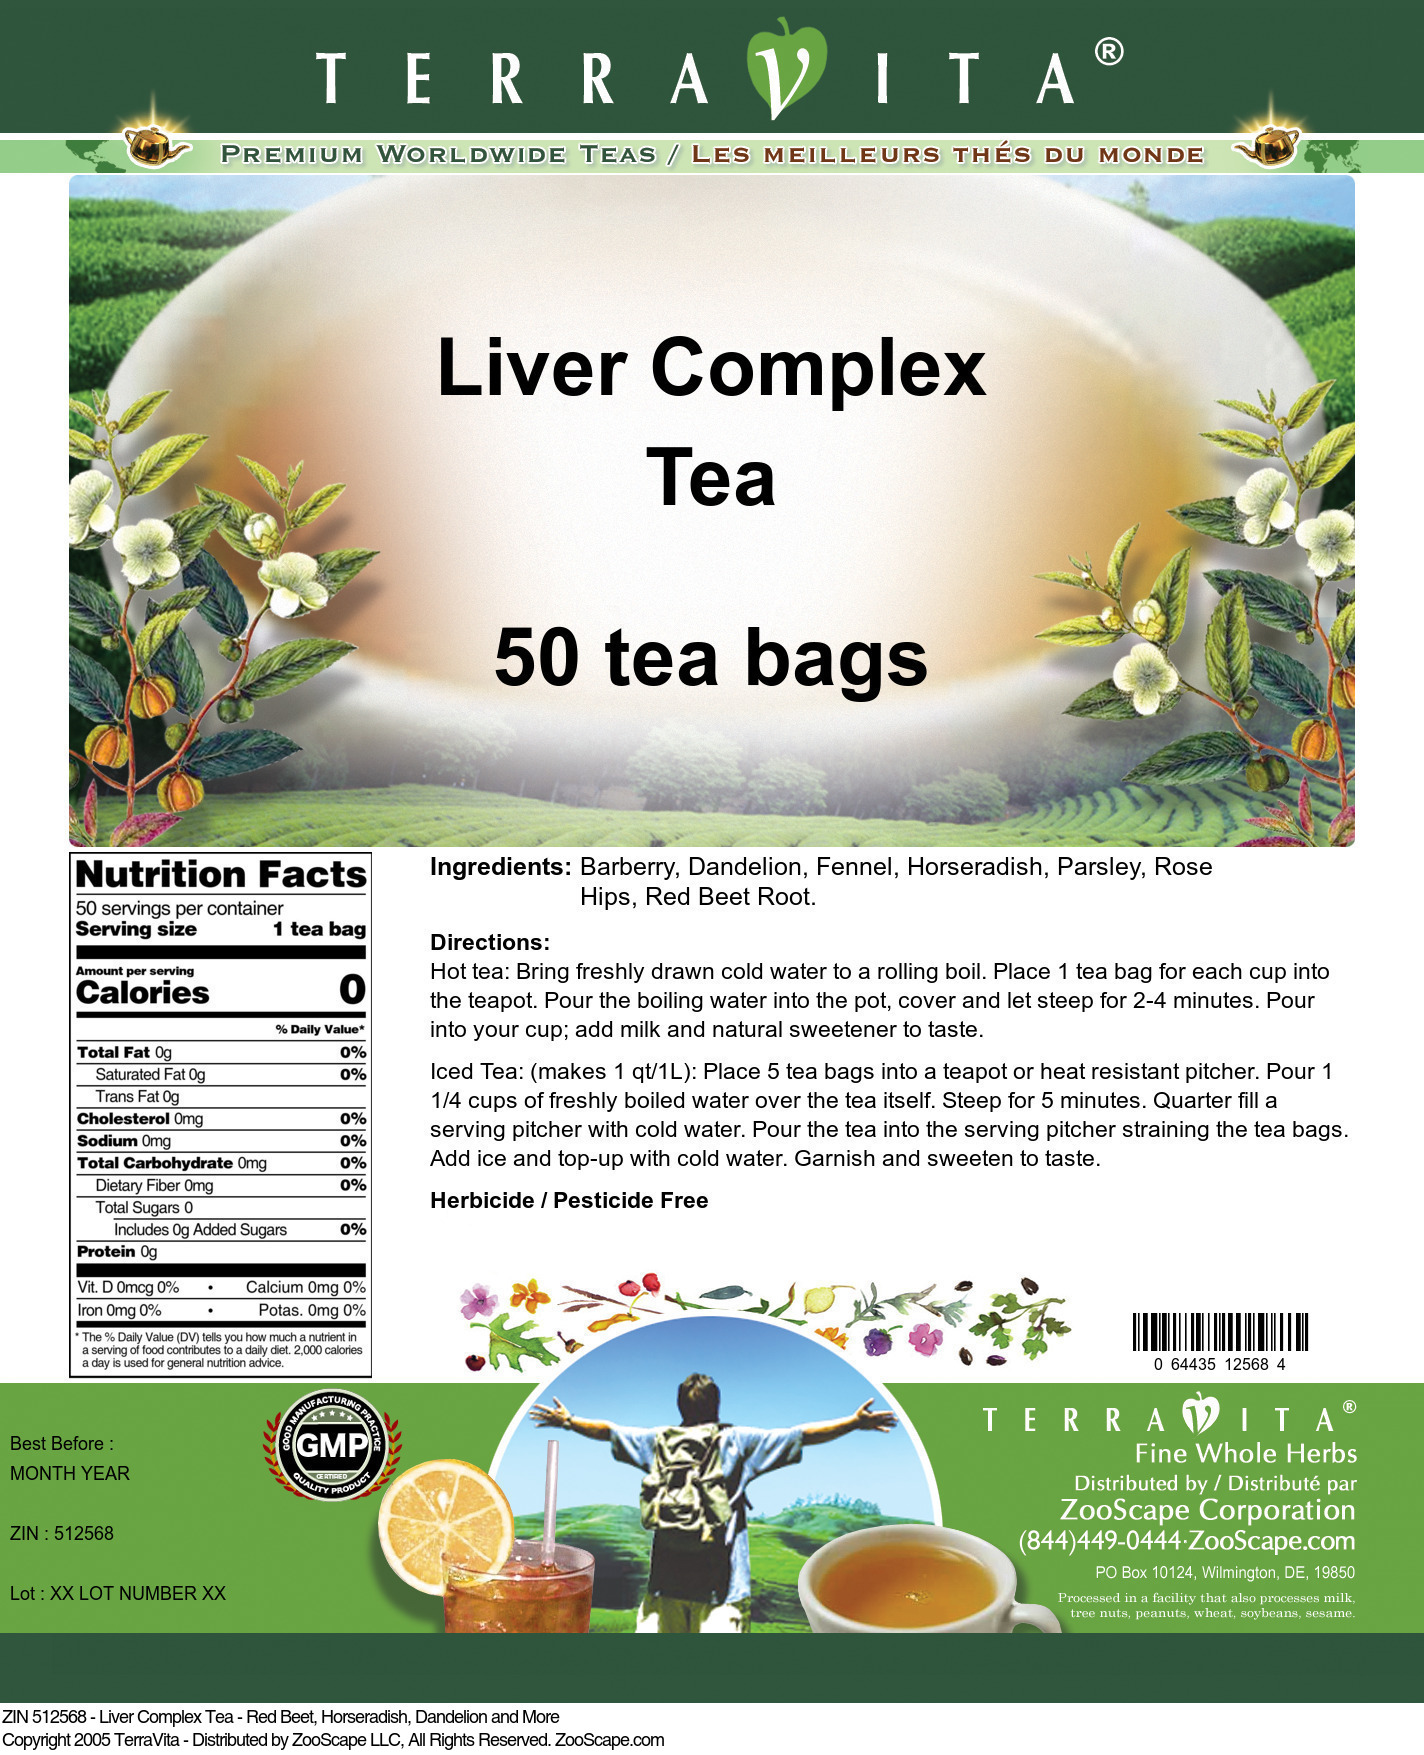 Liver Complex Tea - Red Beet, Horseradish, Dandelion and More - Label